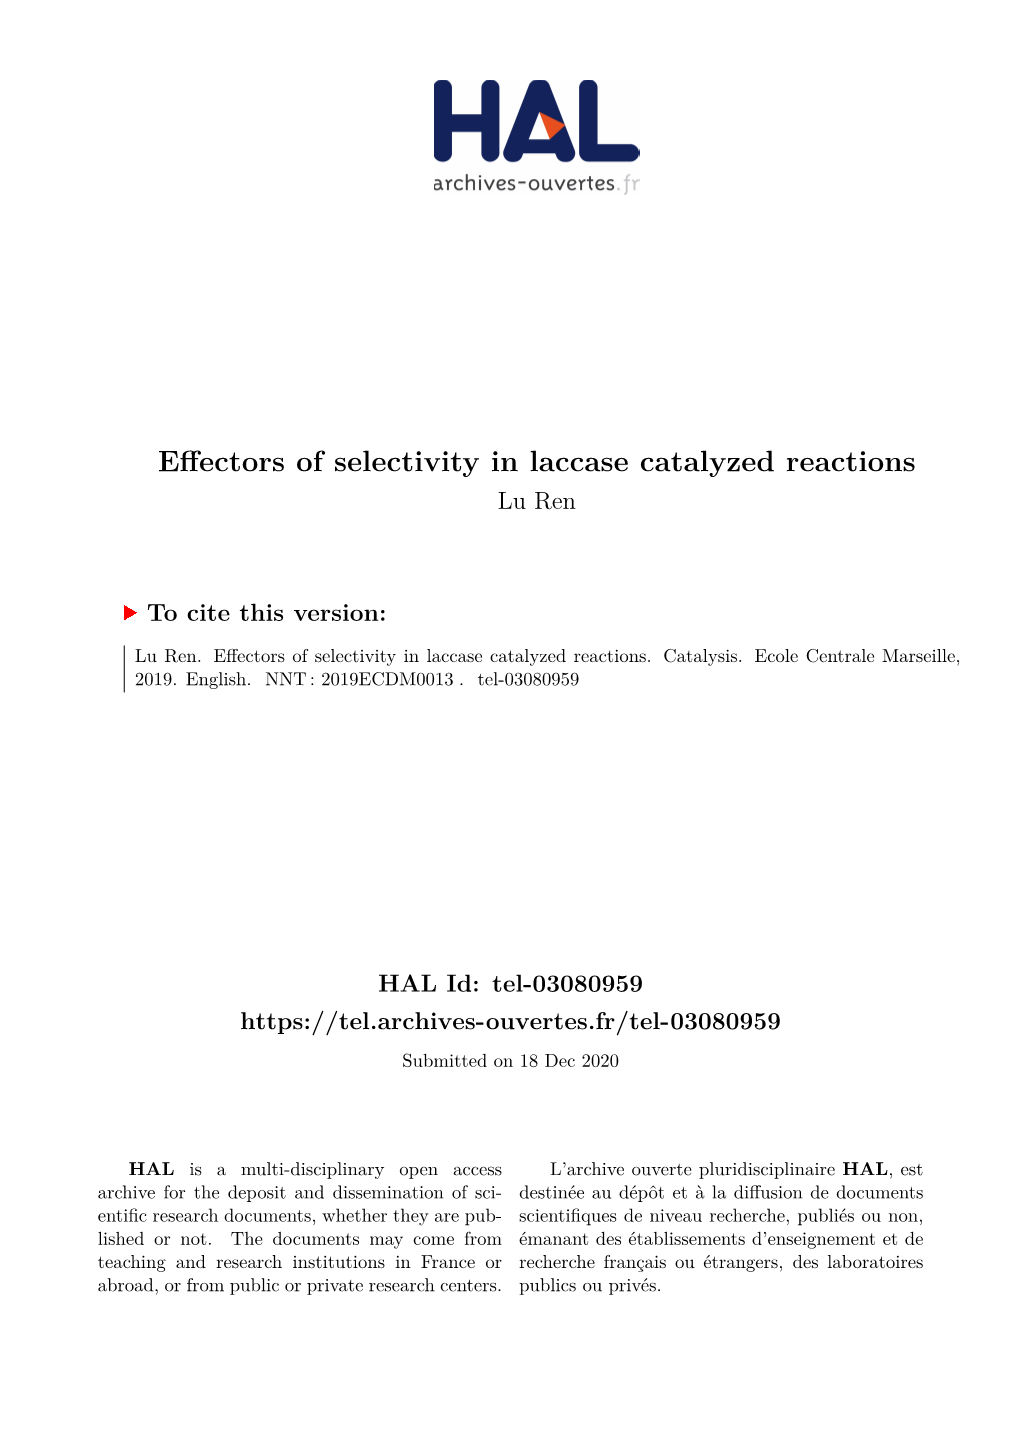 Effectors of Selectivity in Laccase Catalyzed Reactions Lu Ren